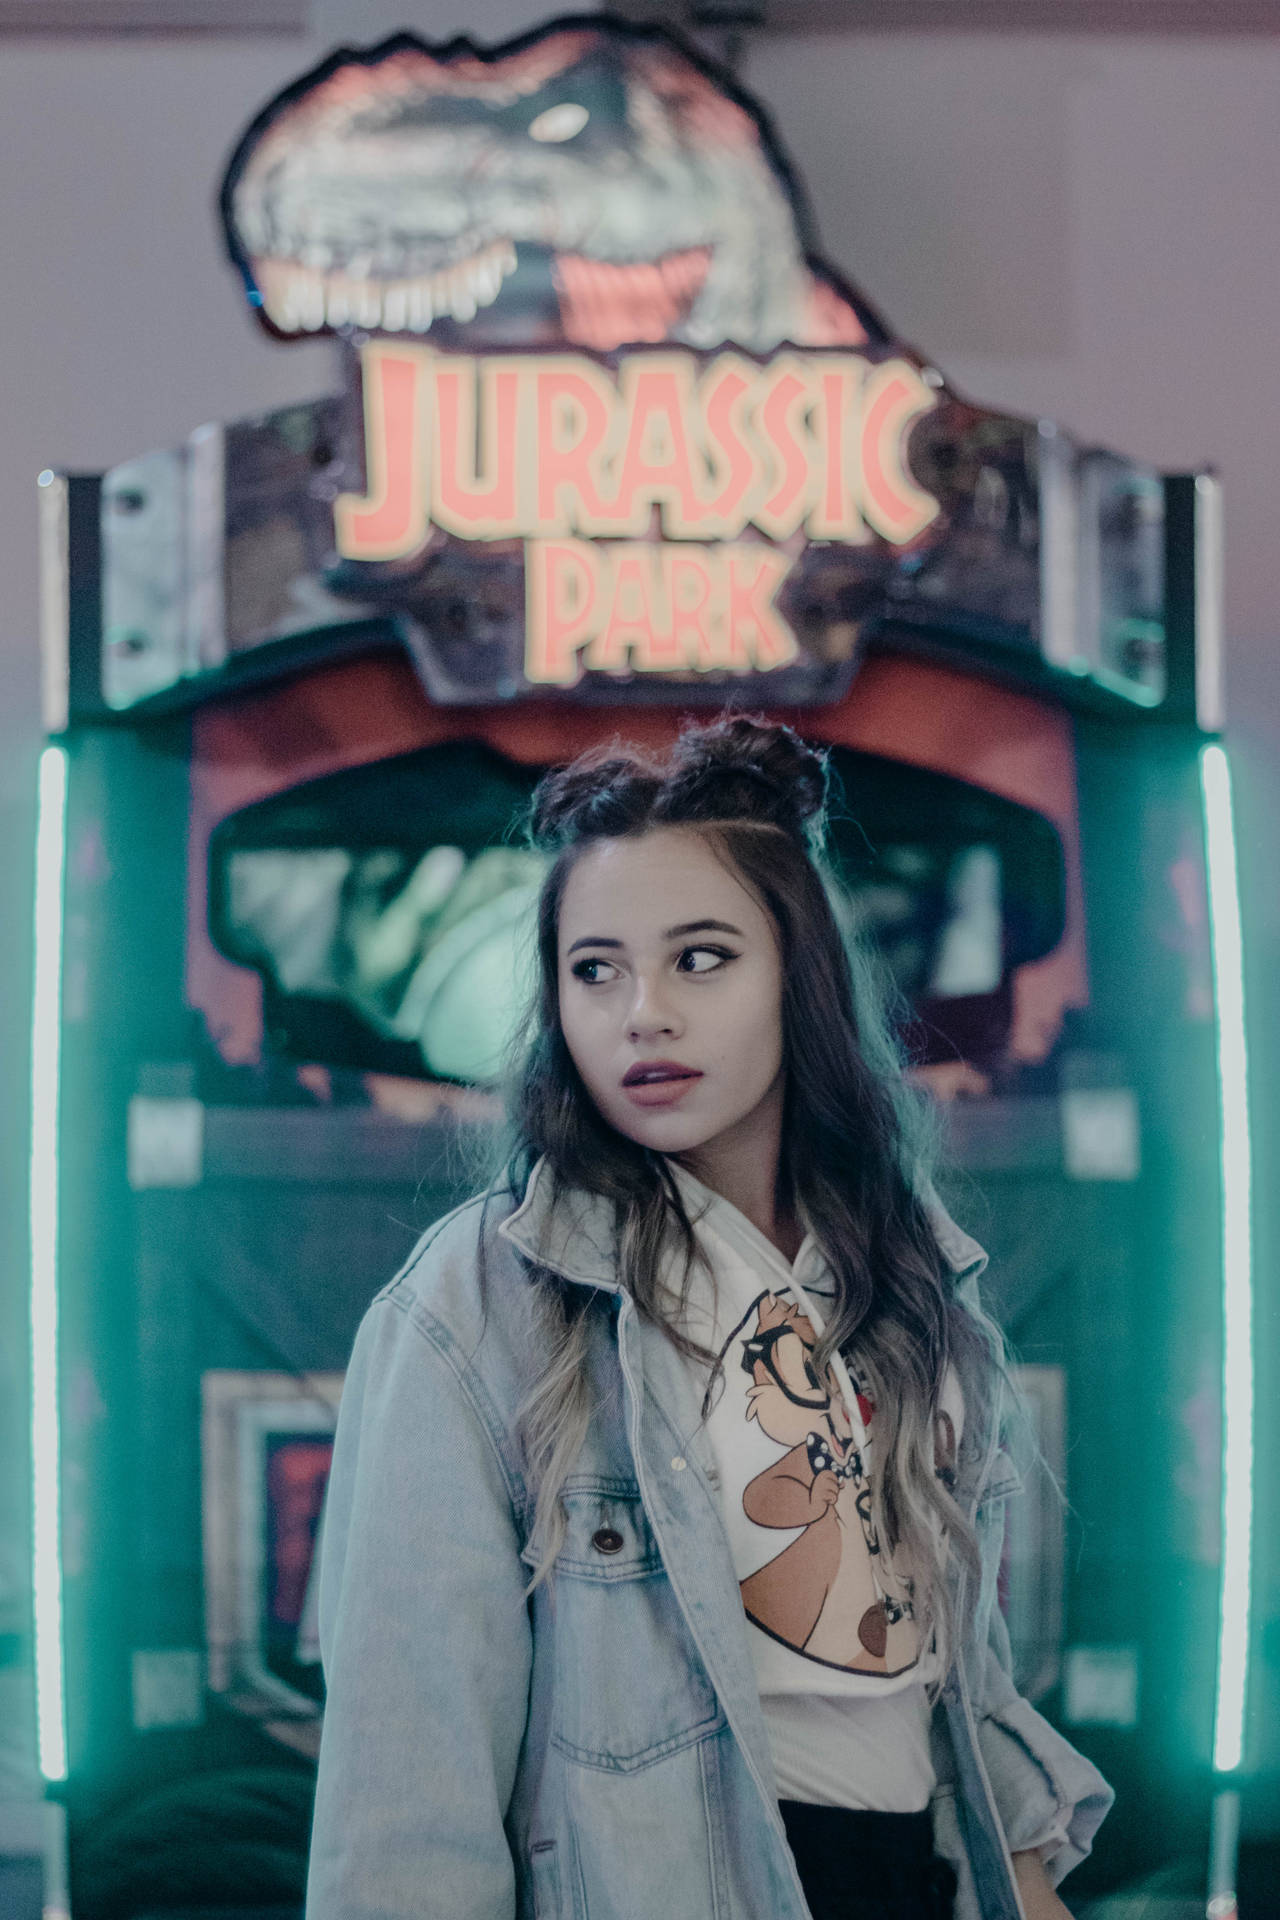 Cool Girl In Jurassic Park Arcade Wallpaper